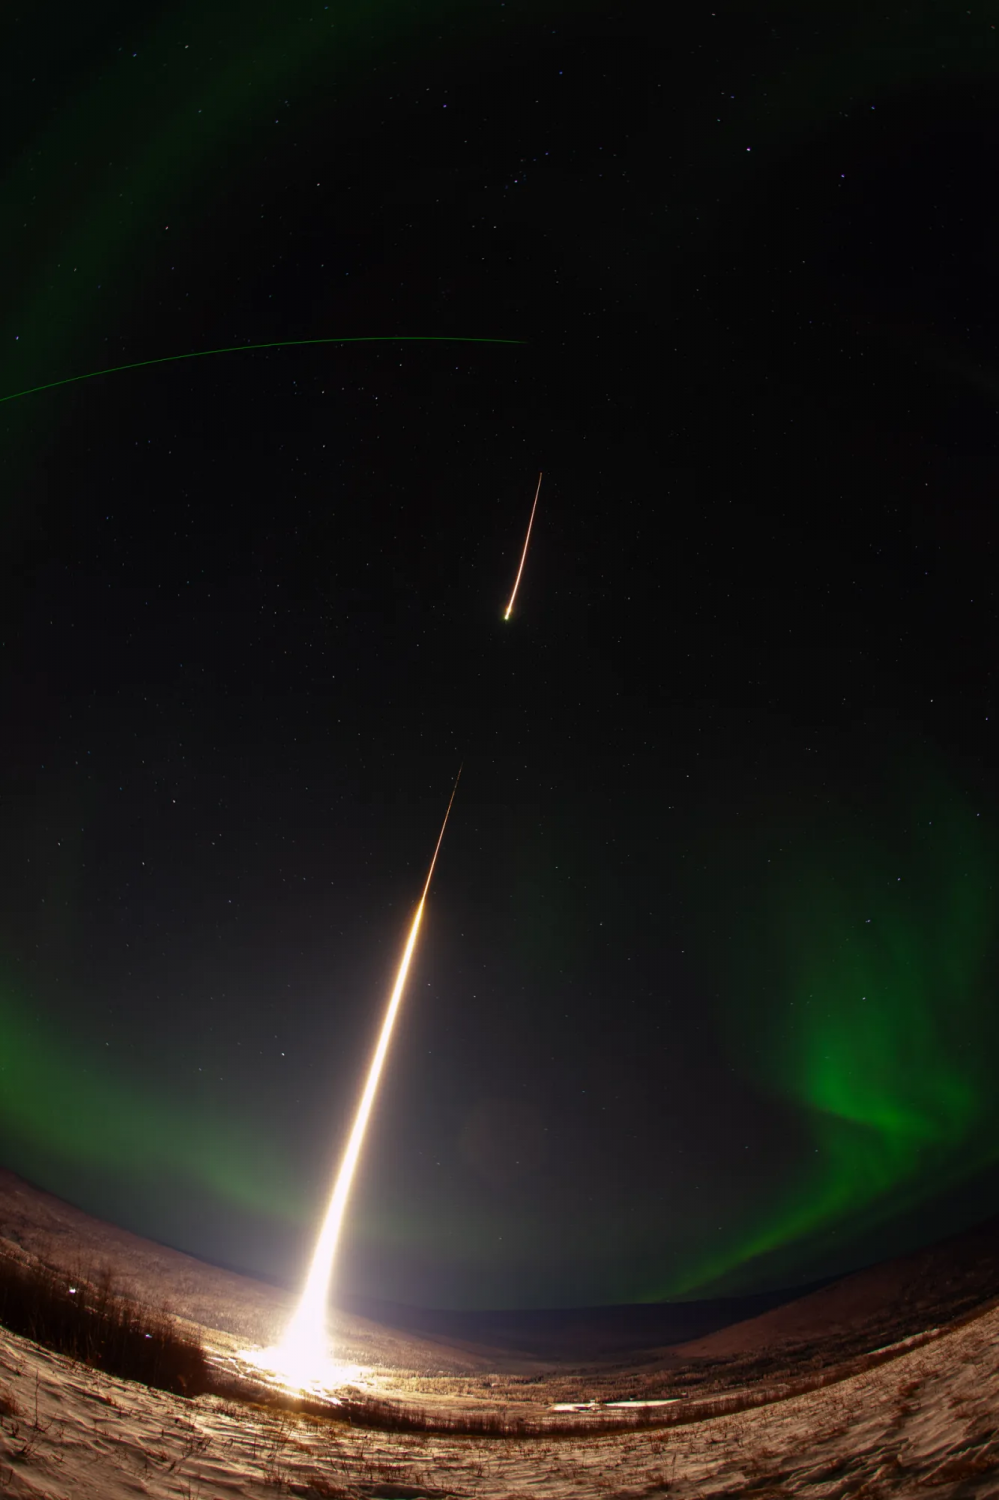 [LOOK] NASA Launches Sounding Rocket Into Stunning Auroras in Alaska